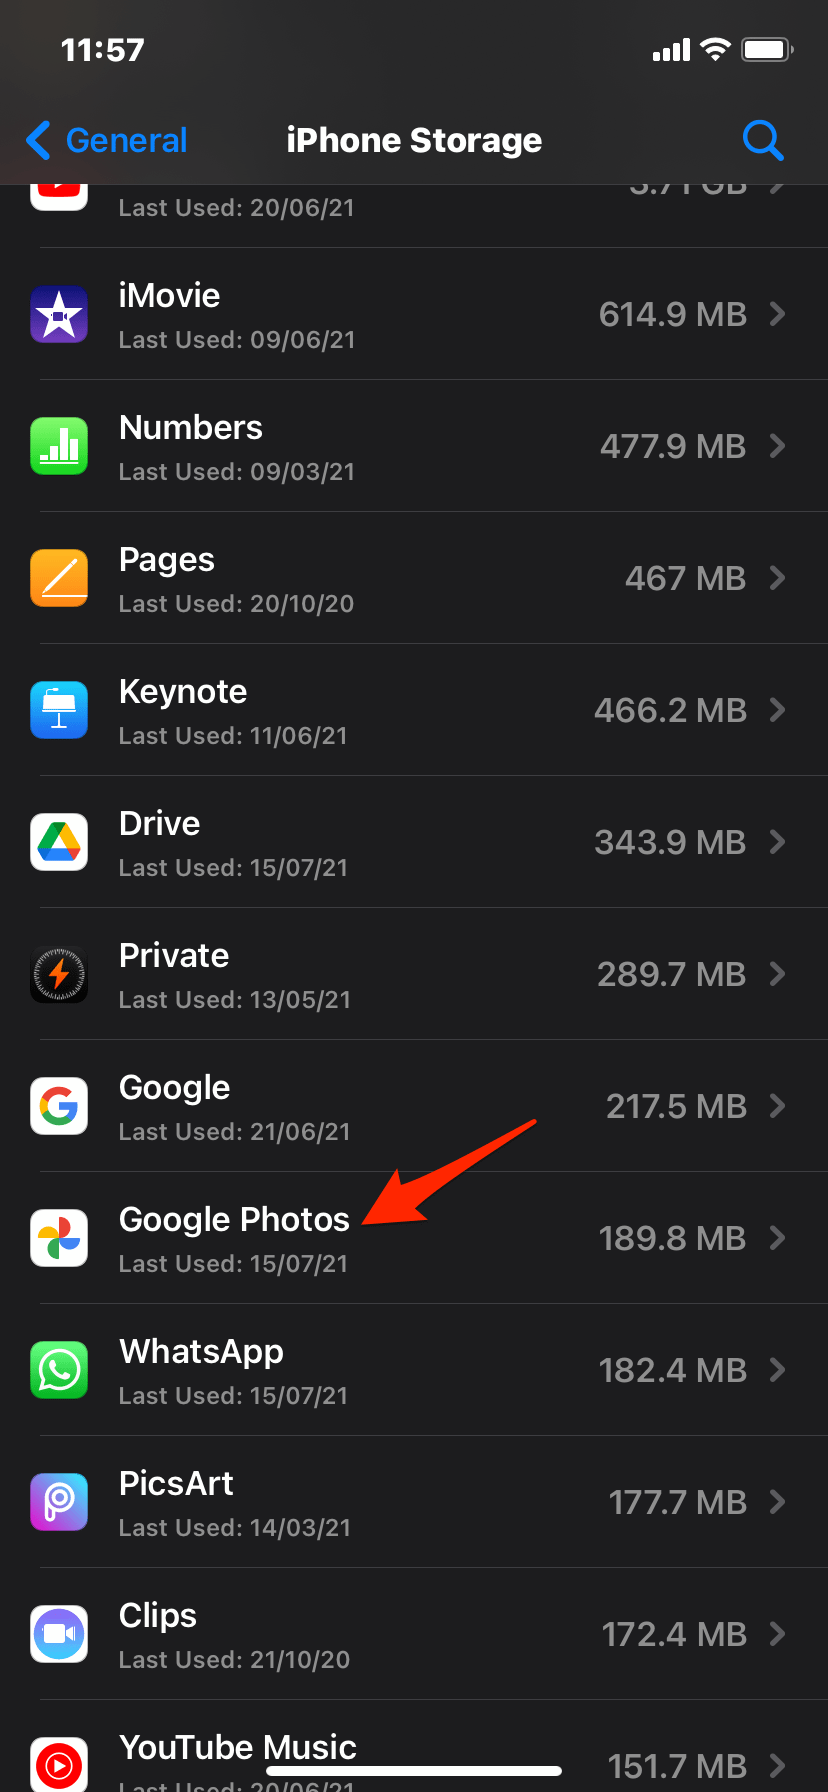 Google Photos from List of iOS Storage